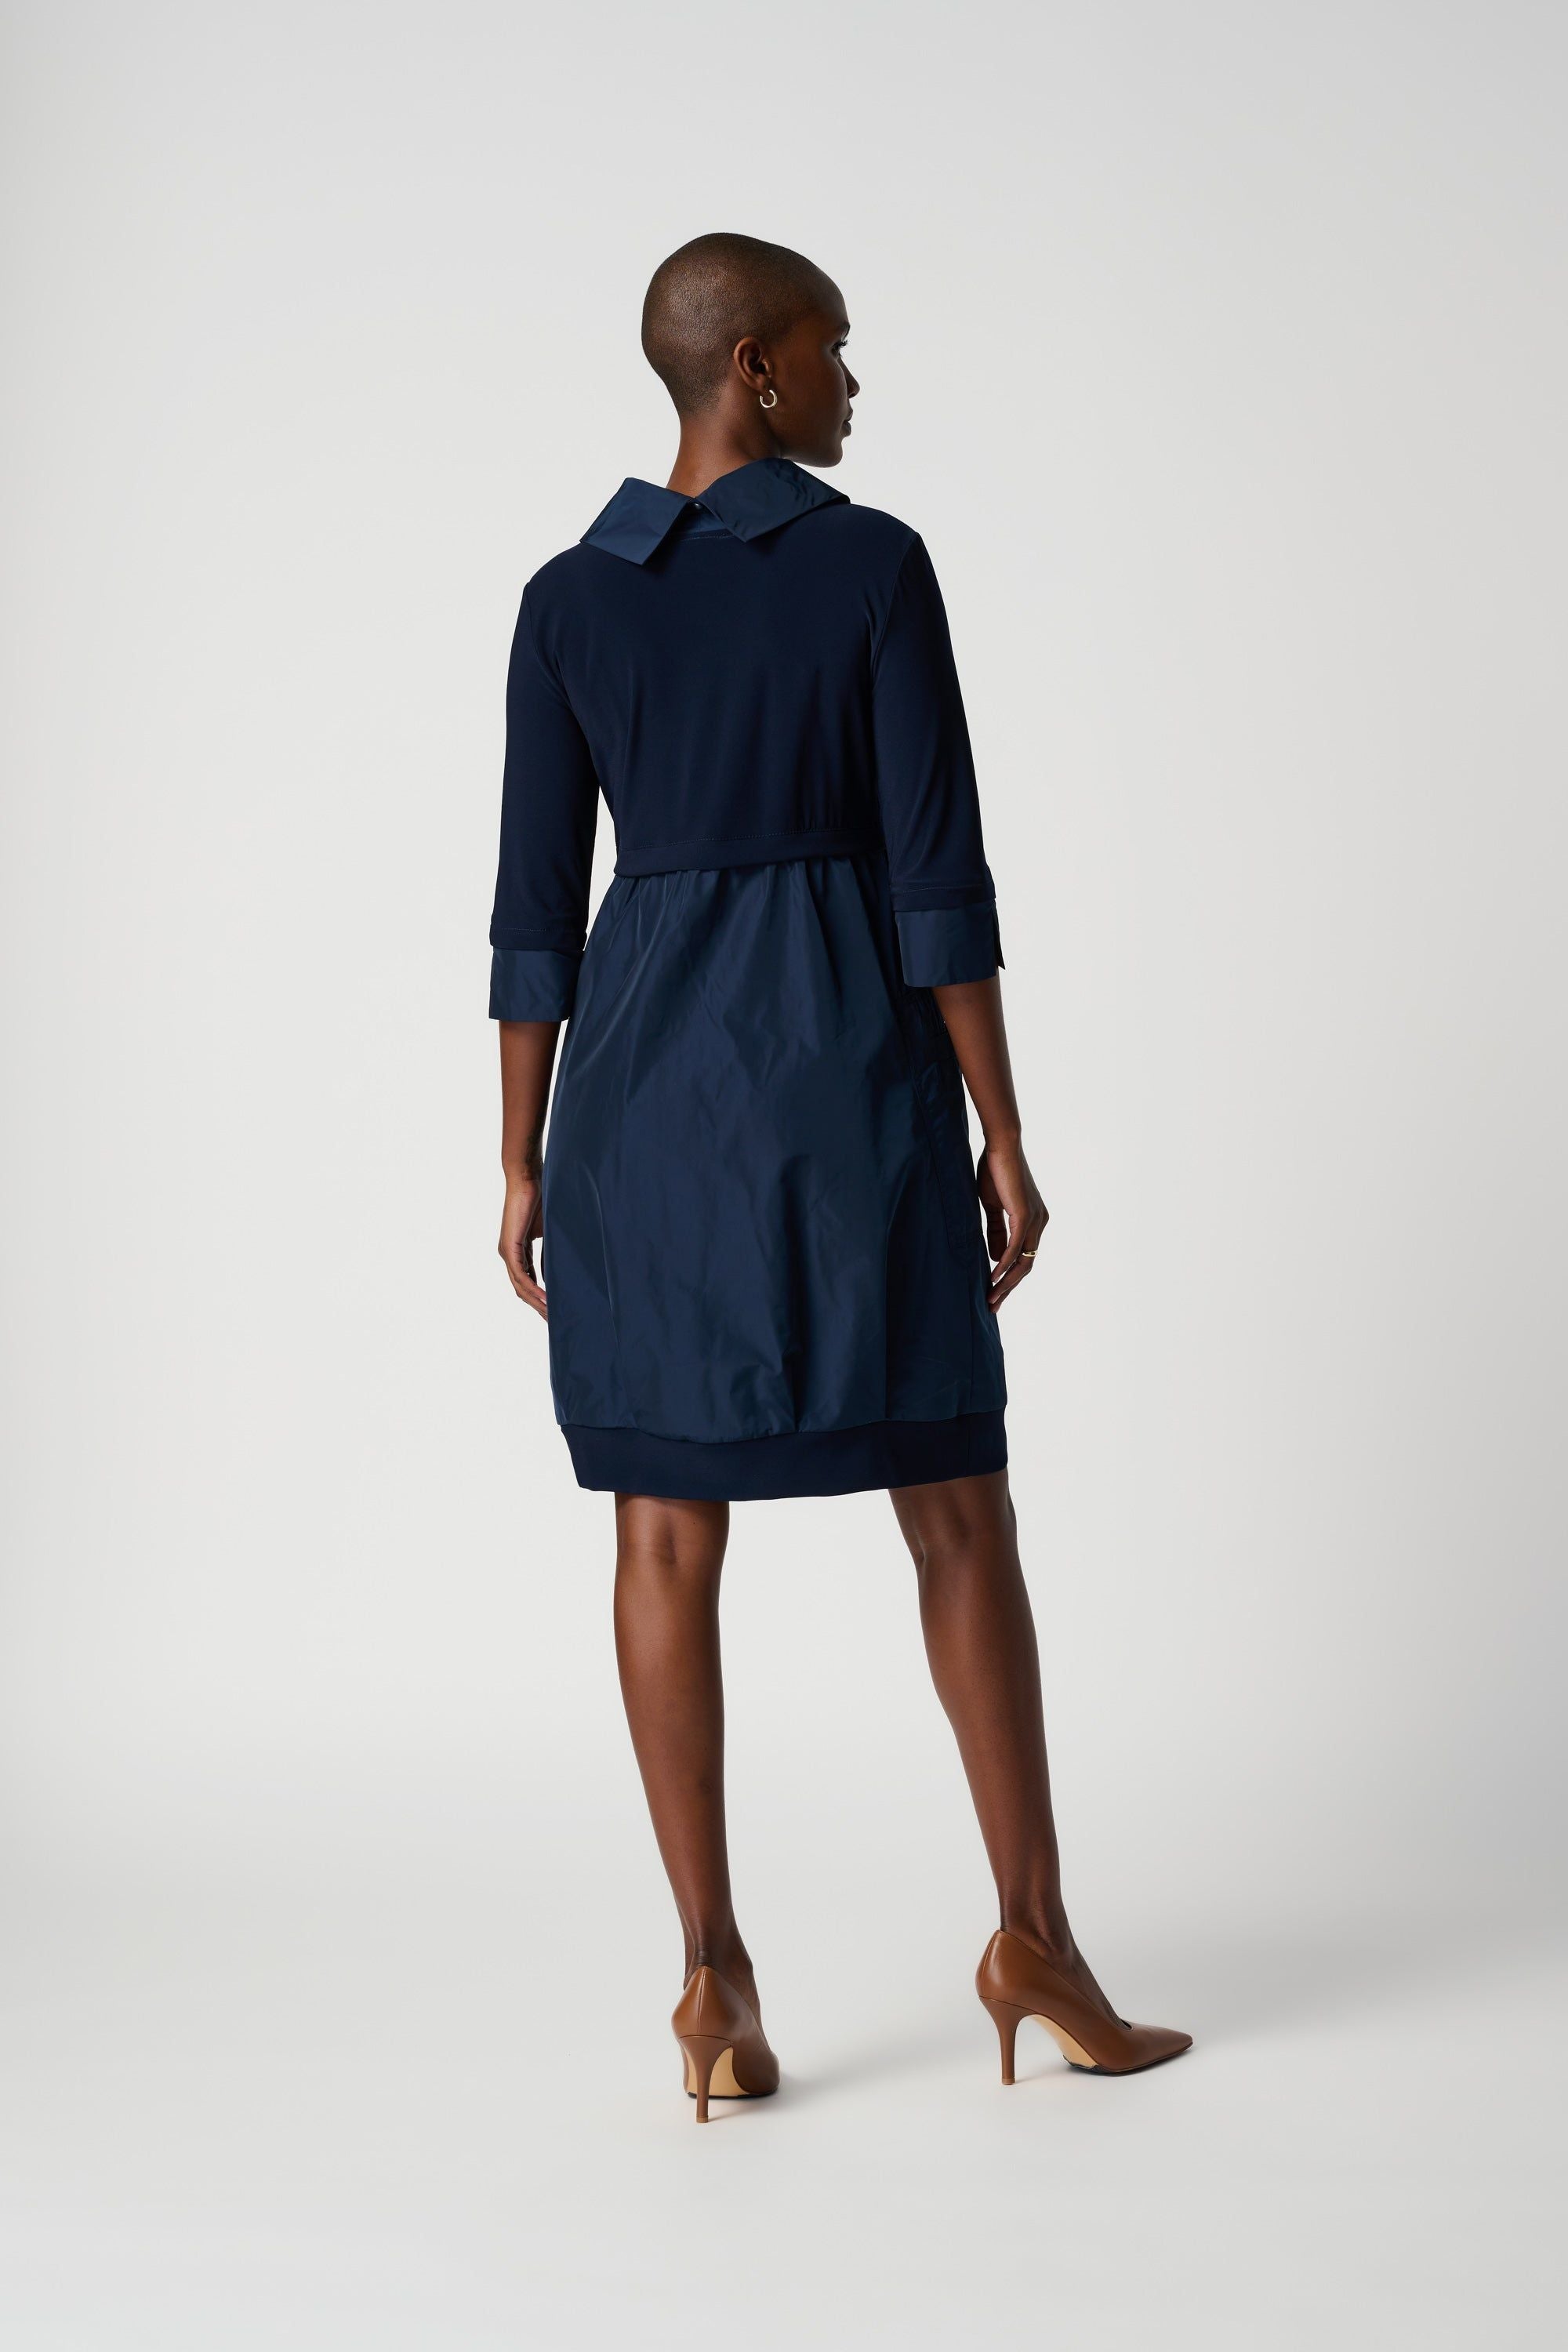 Joseph Ribkoff Miracle Dress - Style 173444TT, back, midnight blue